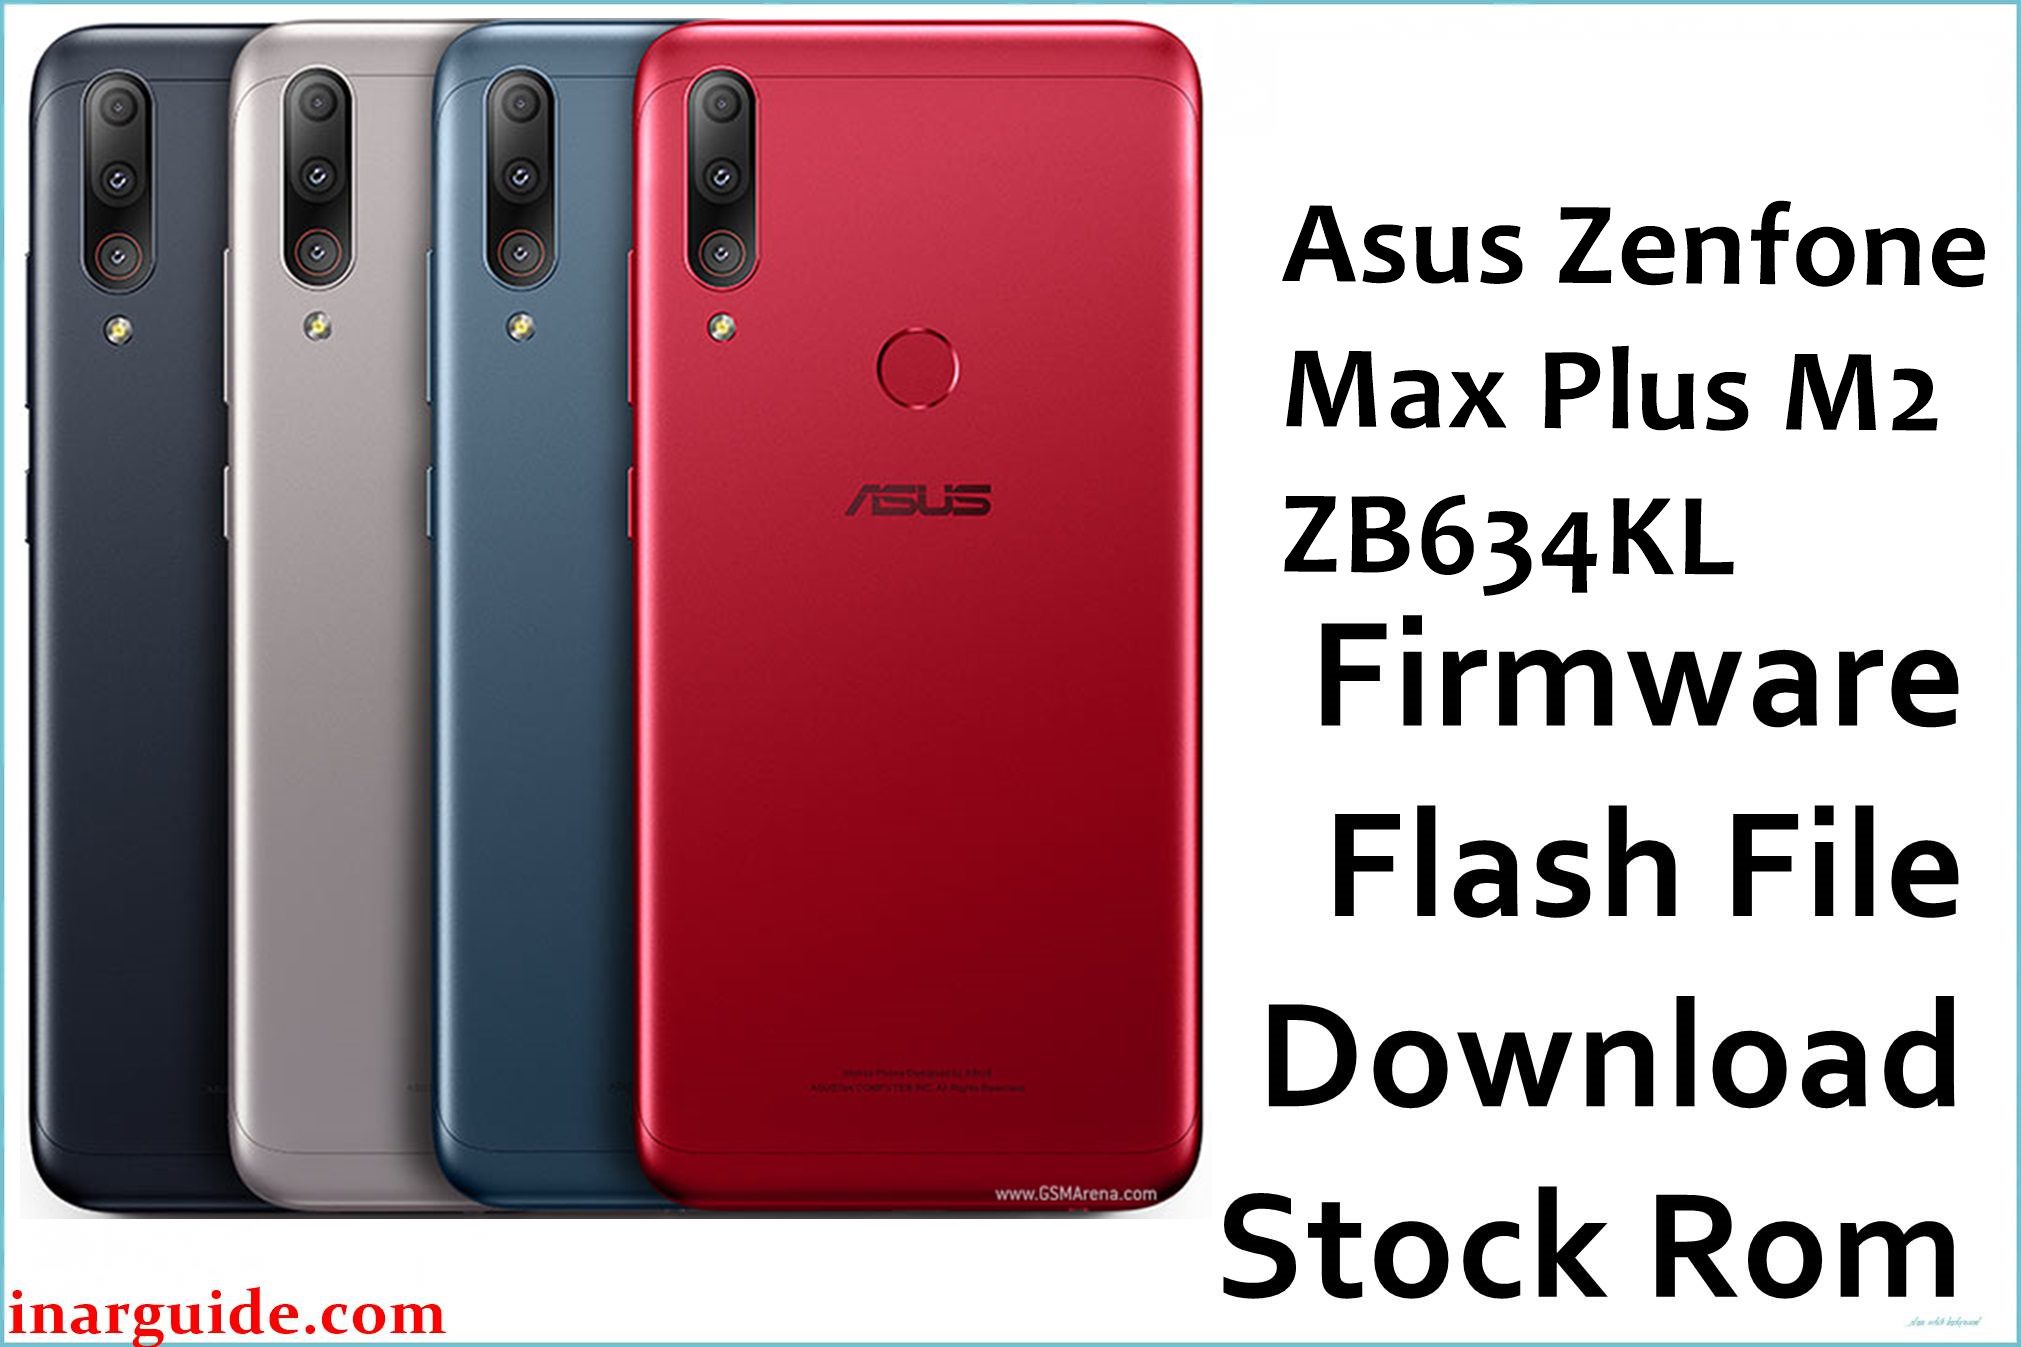 Asus Zenfone Max Plus M2 ZB634KL